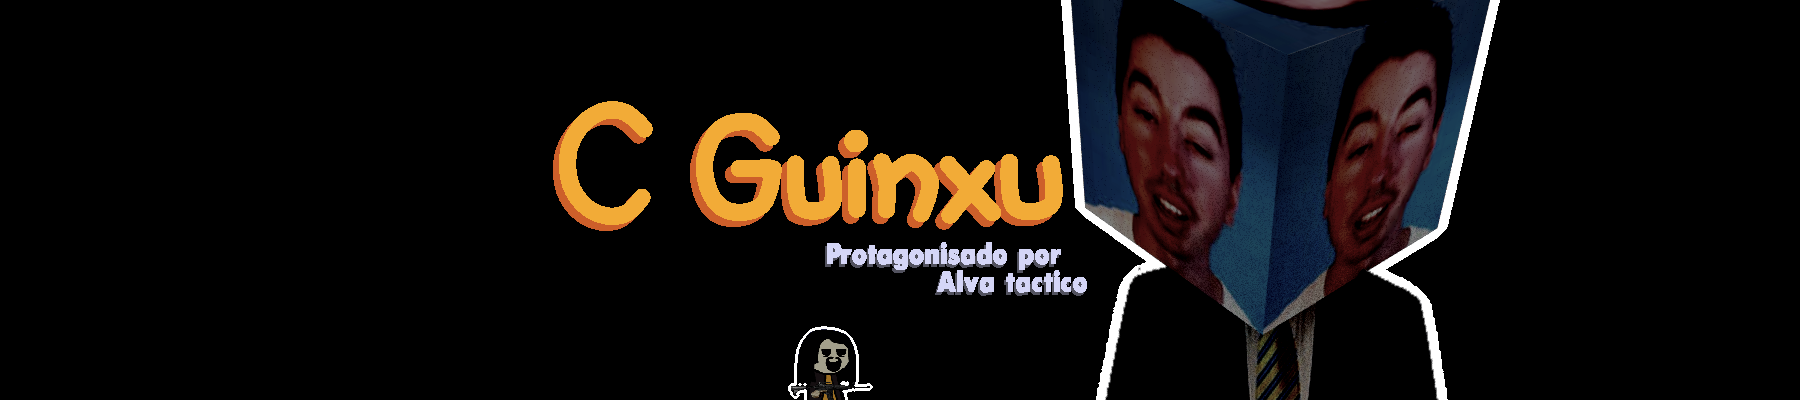 C Guinxu